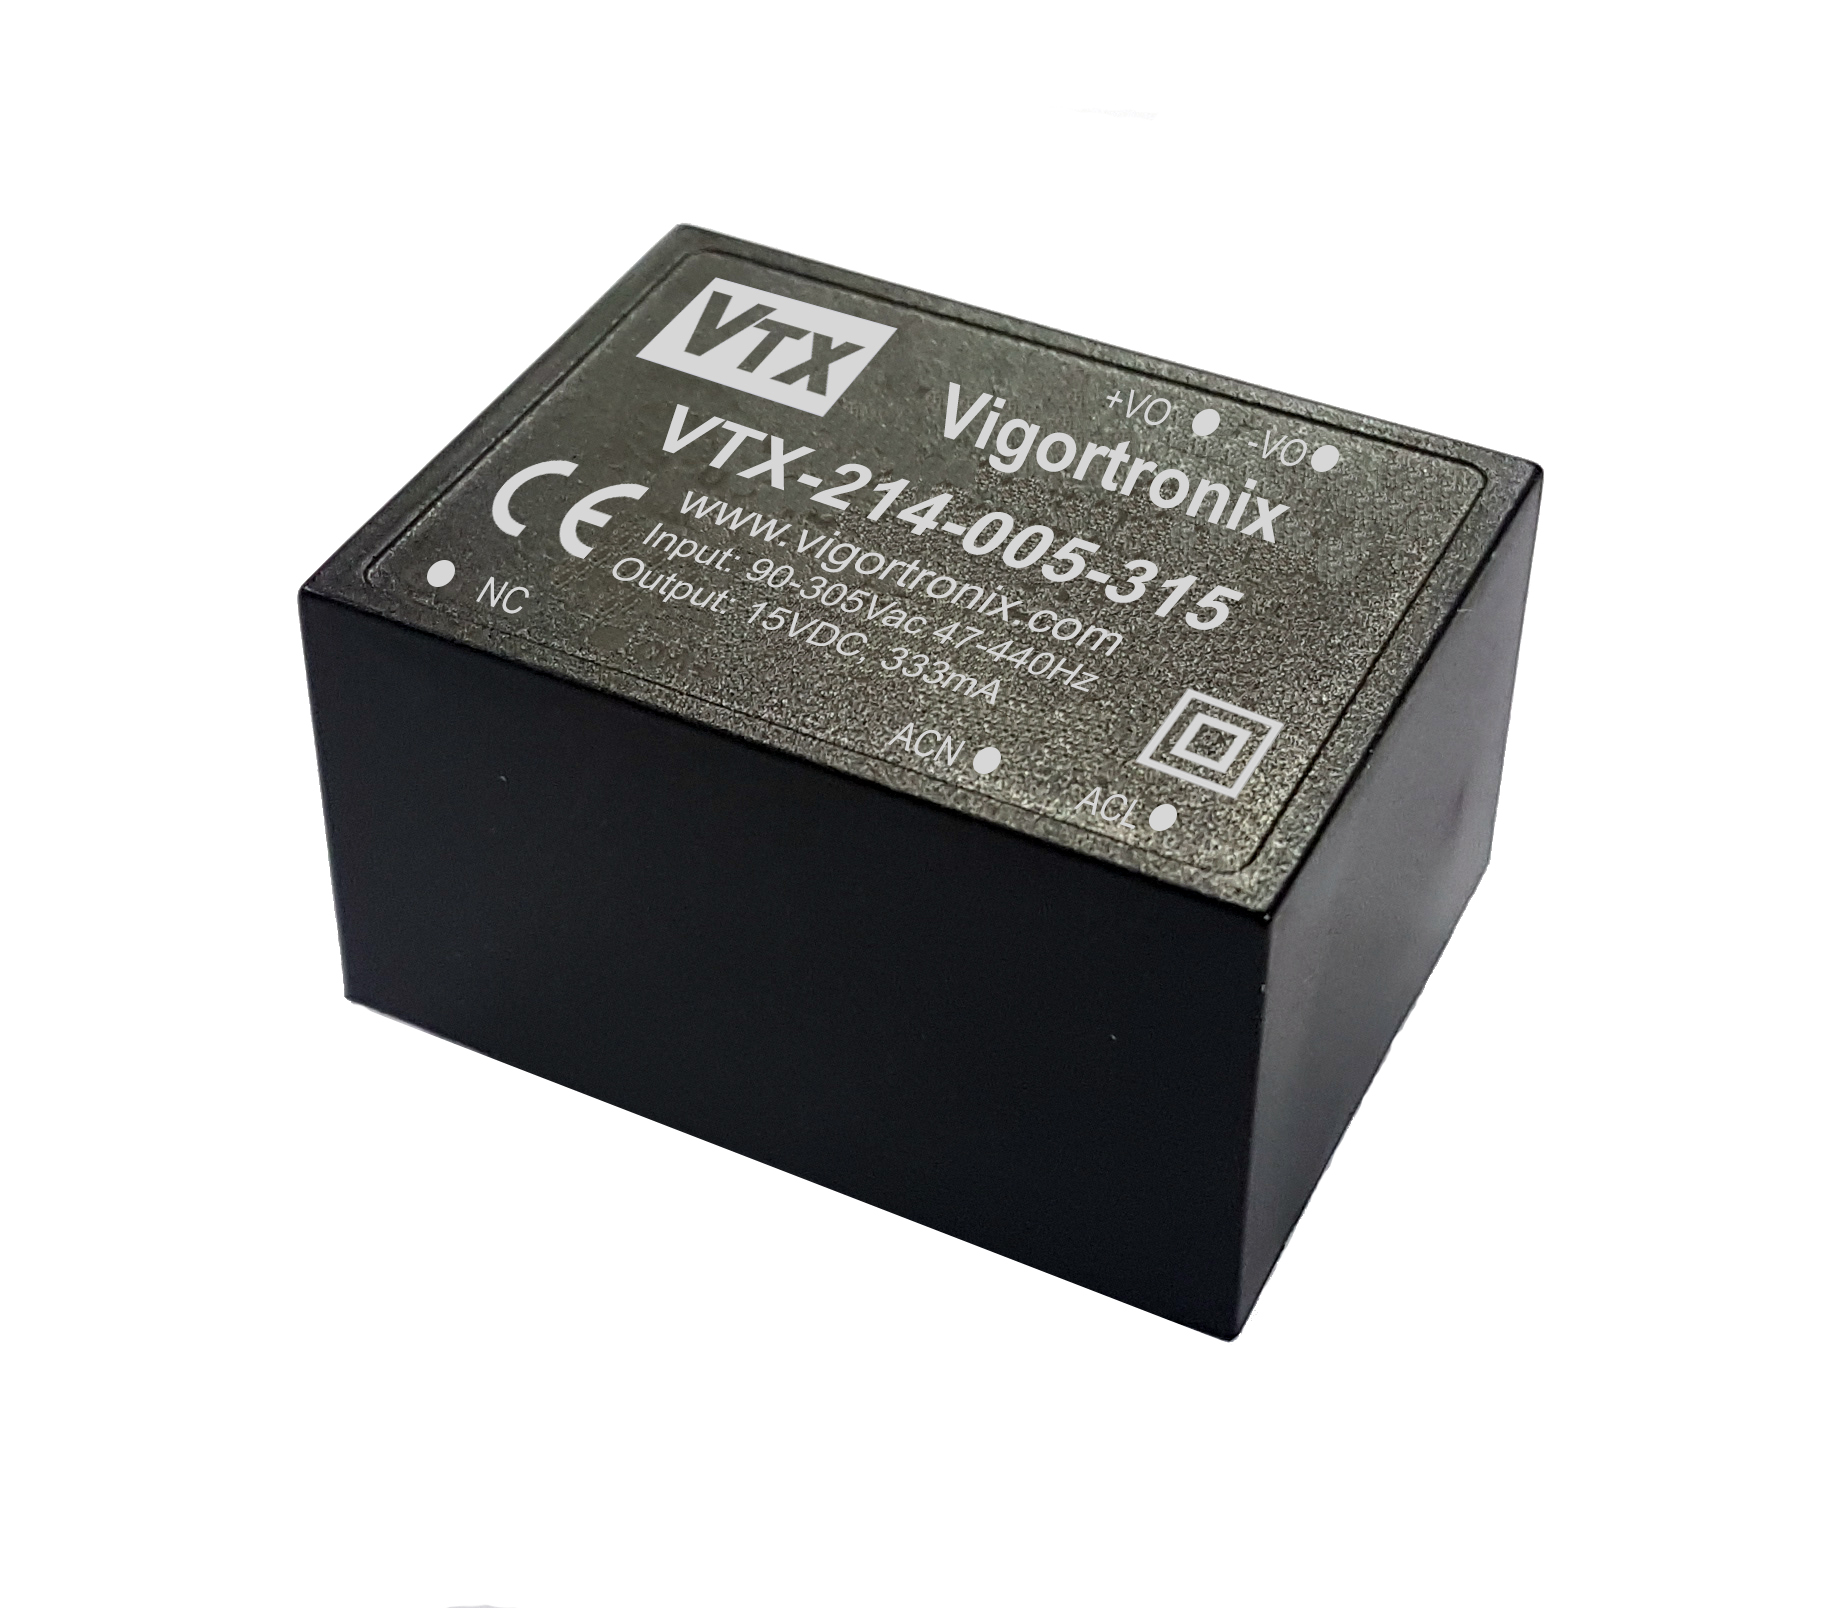 Vigortronix VTX-214-005-3 AC-DC Converter 5 Watt